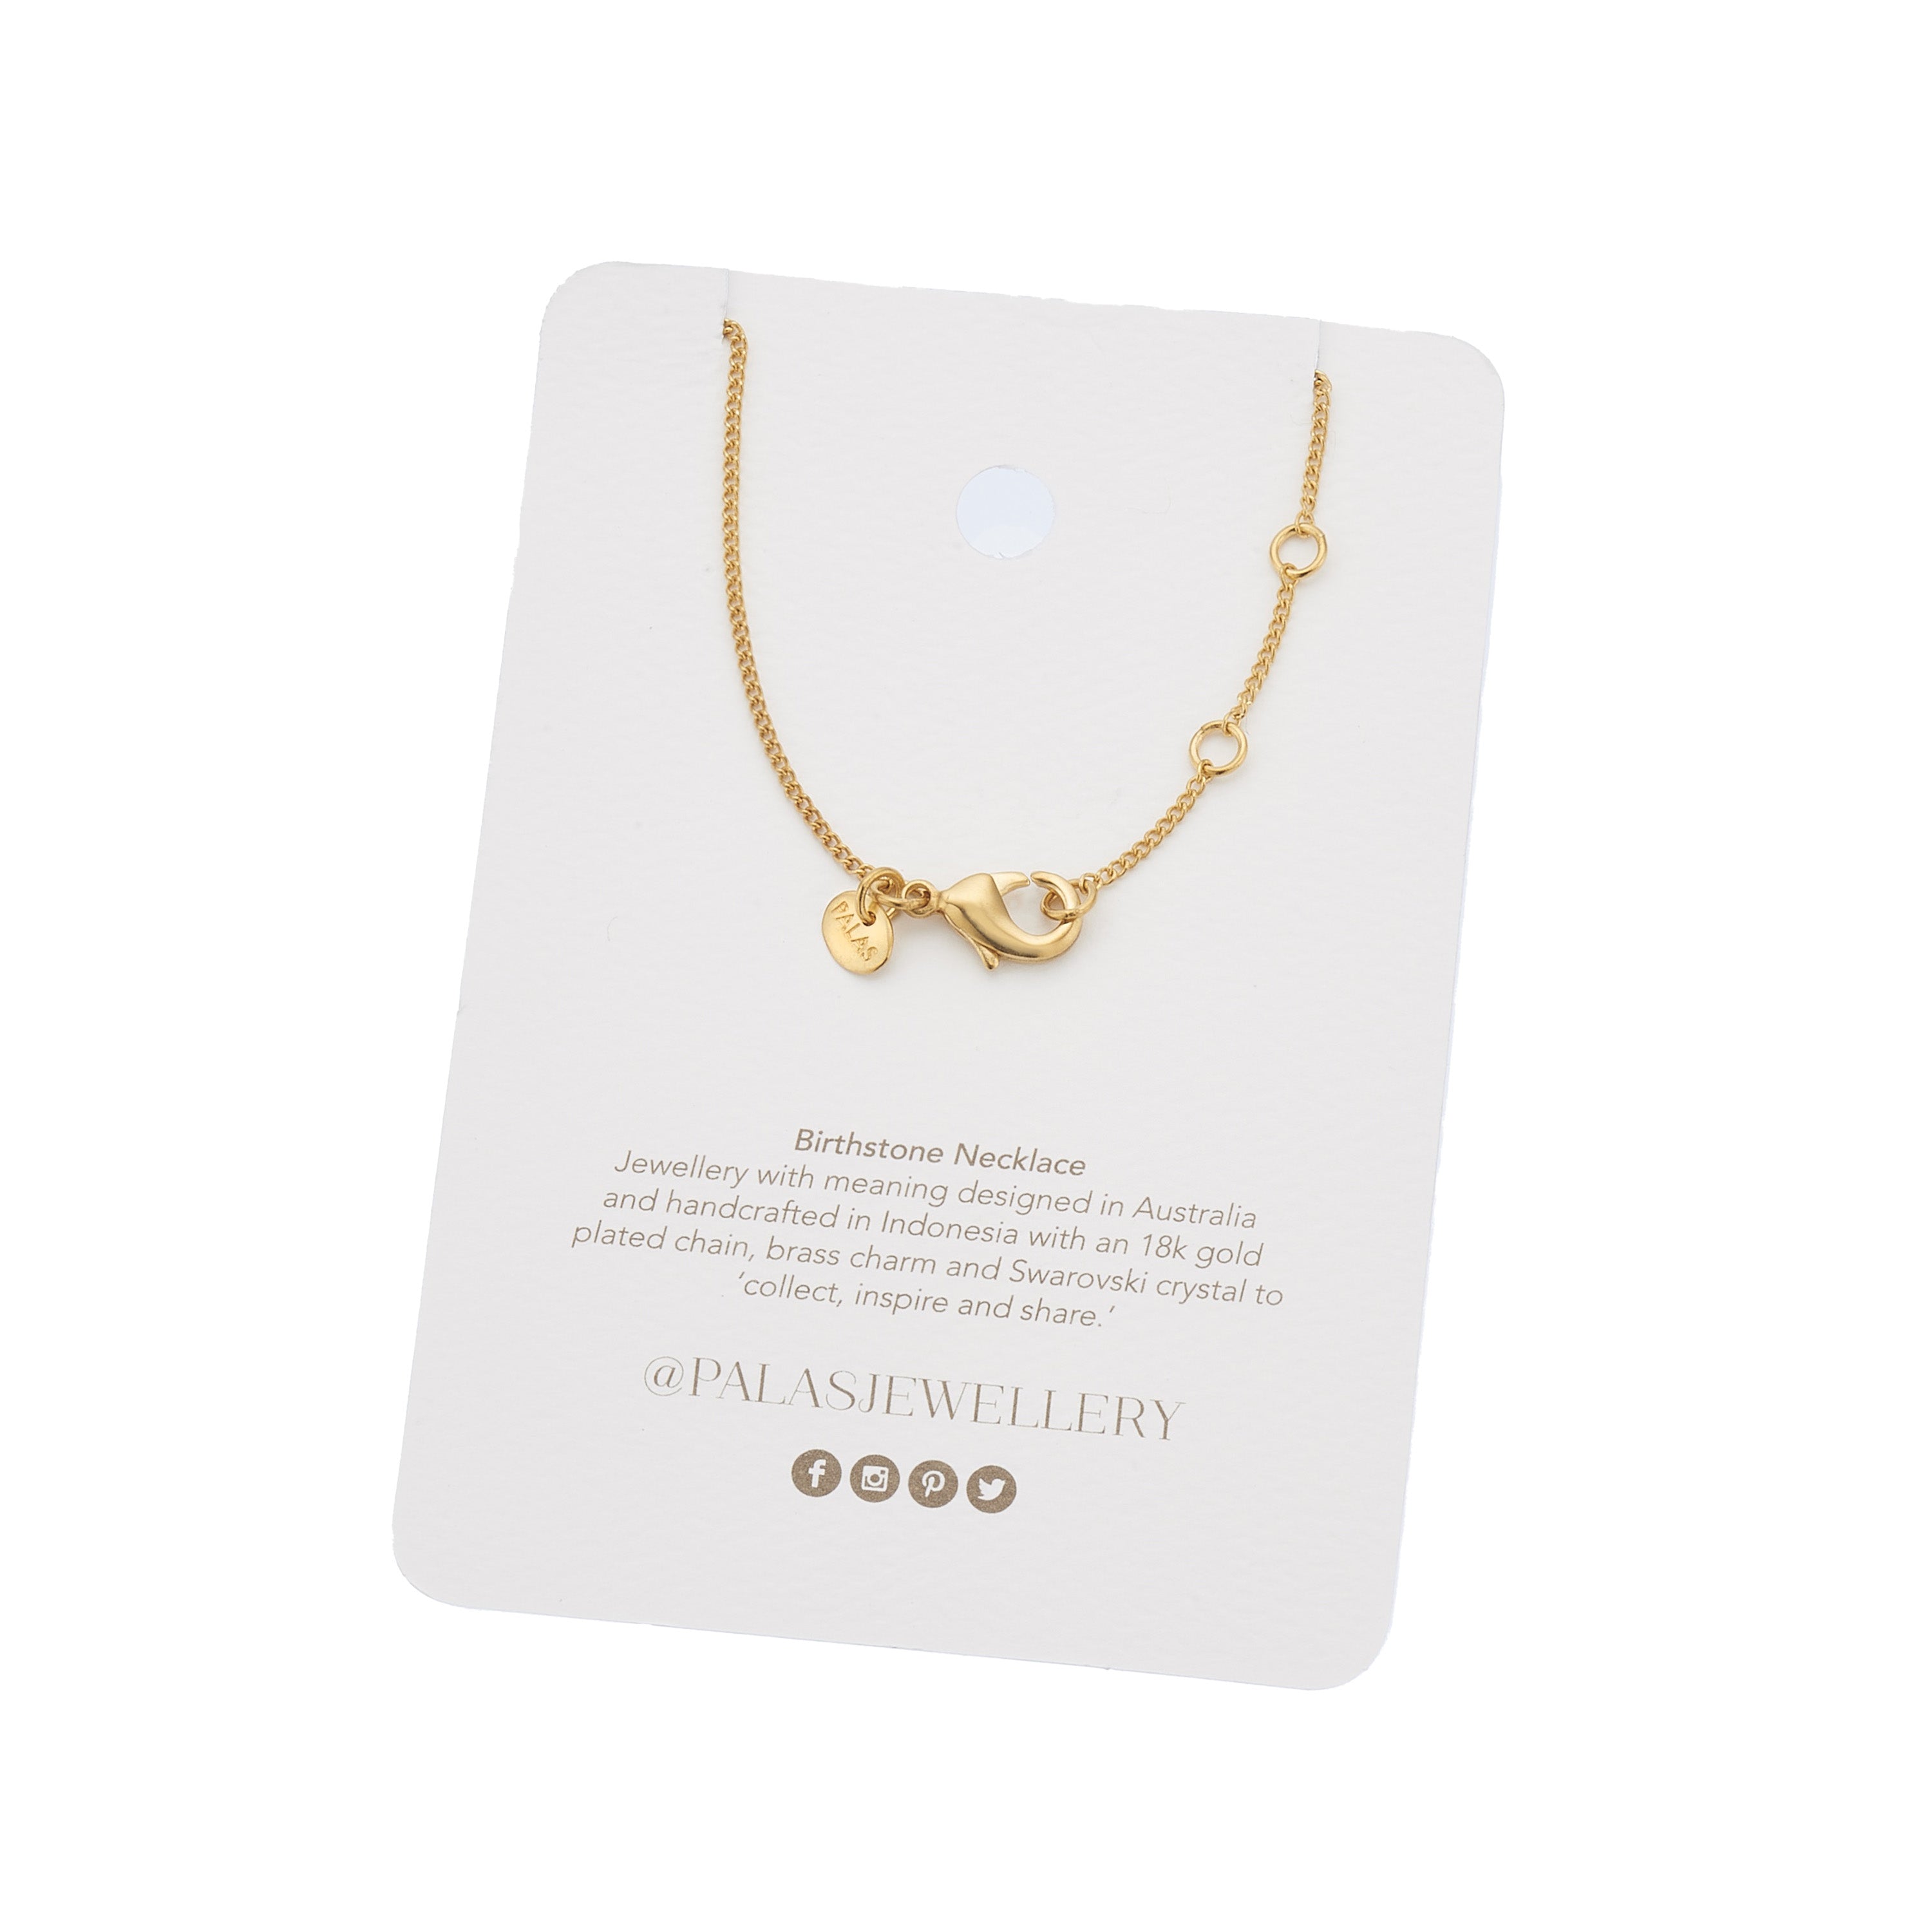 November citrine birthstone necklace 18k gold plated